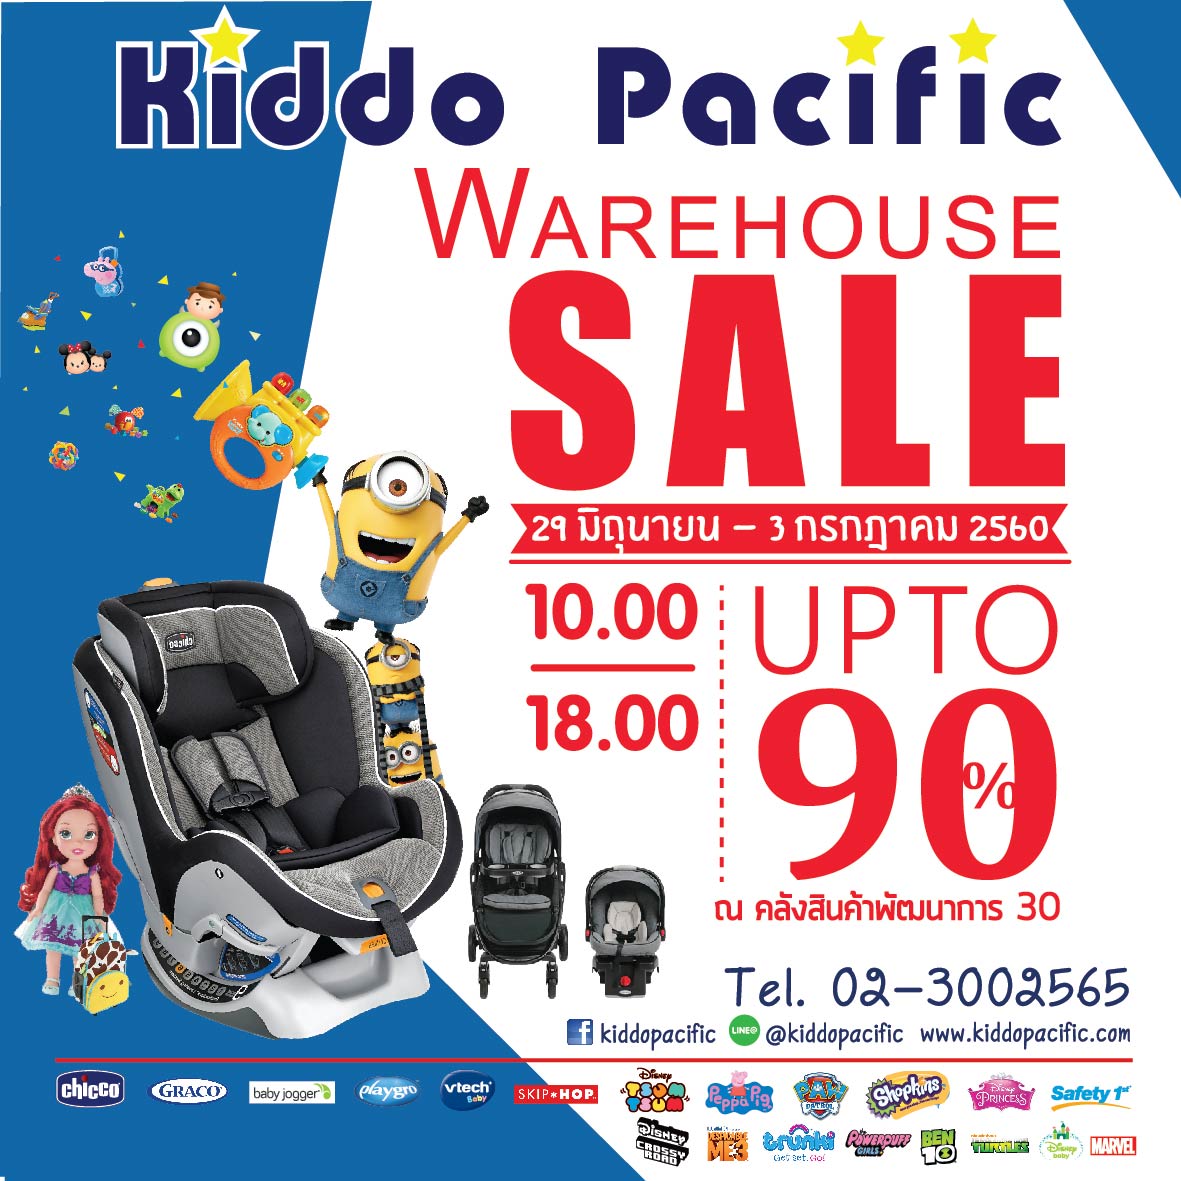 Kiddo Pacific Warehouse Sale